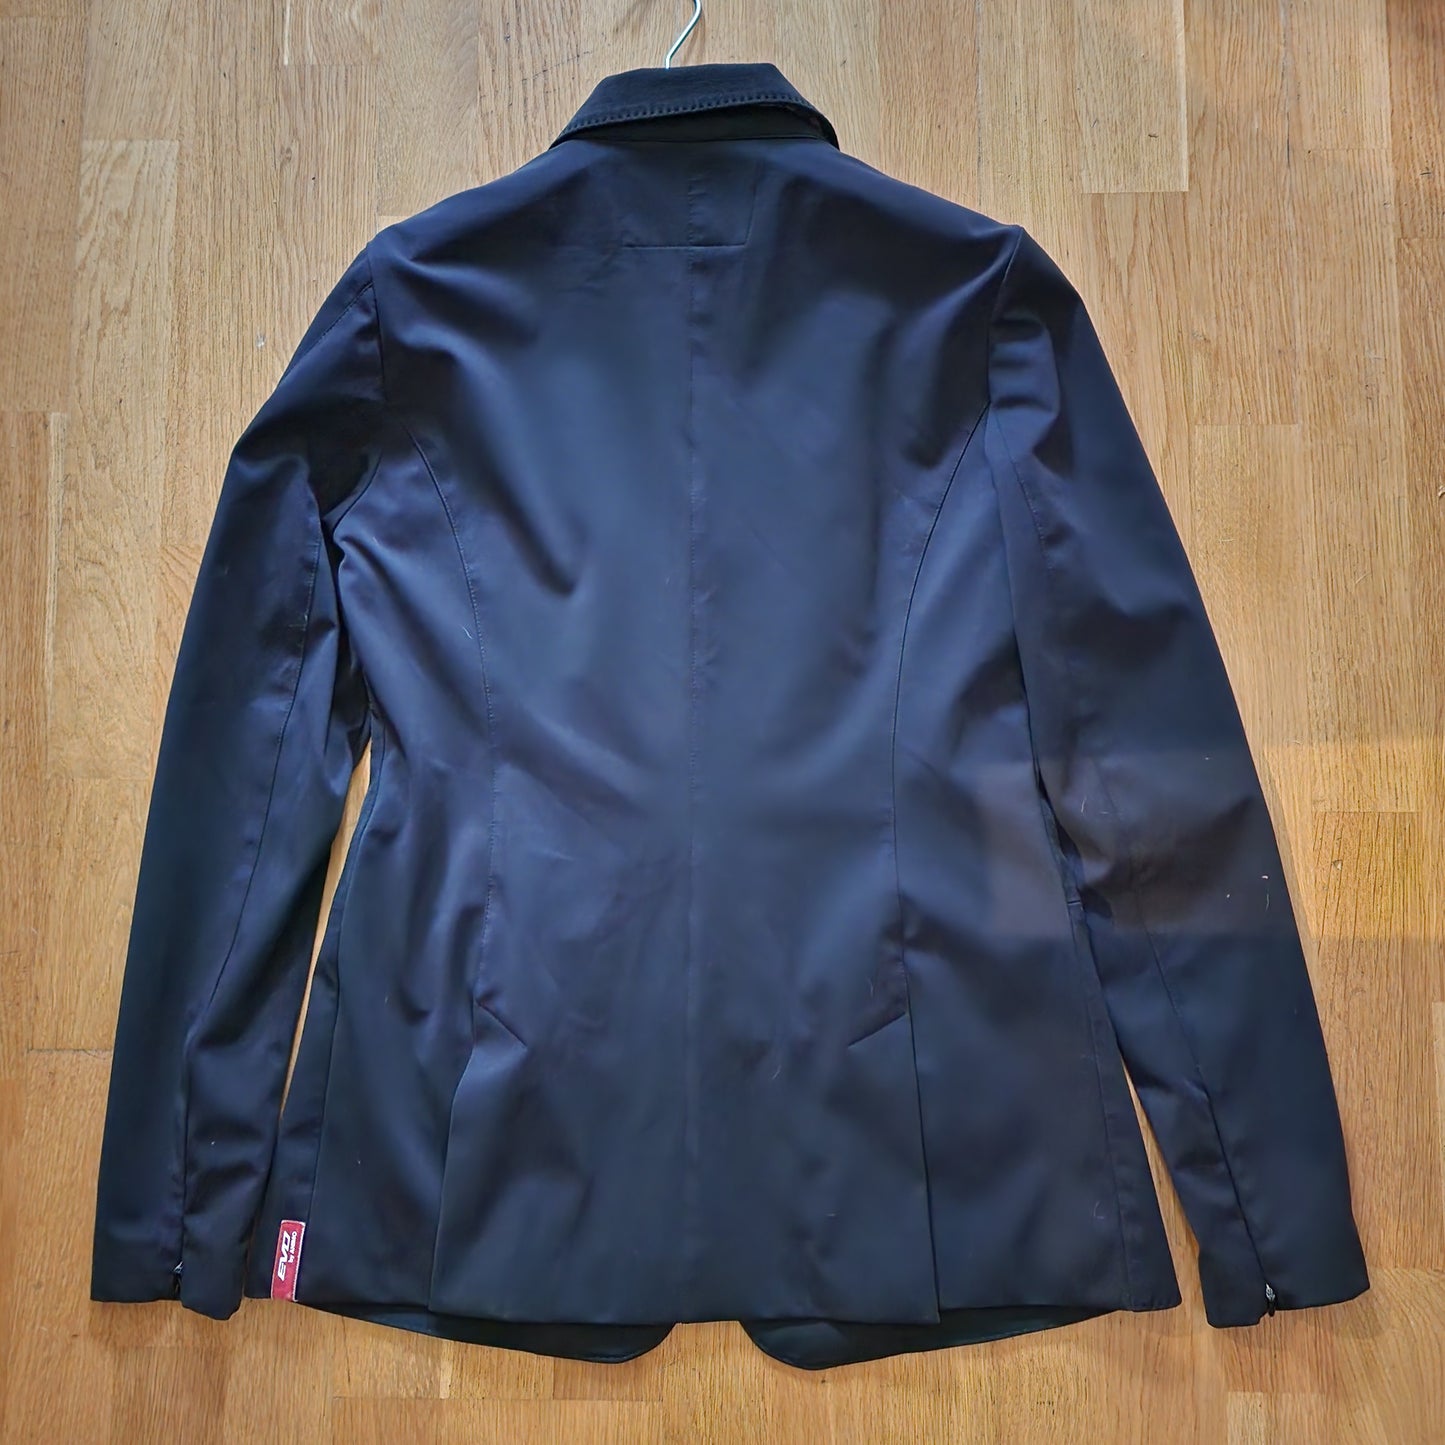 Animo black show jacket, ladies 14